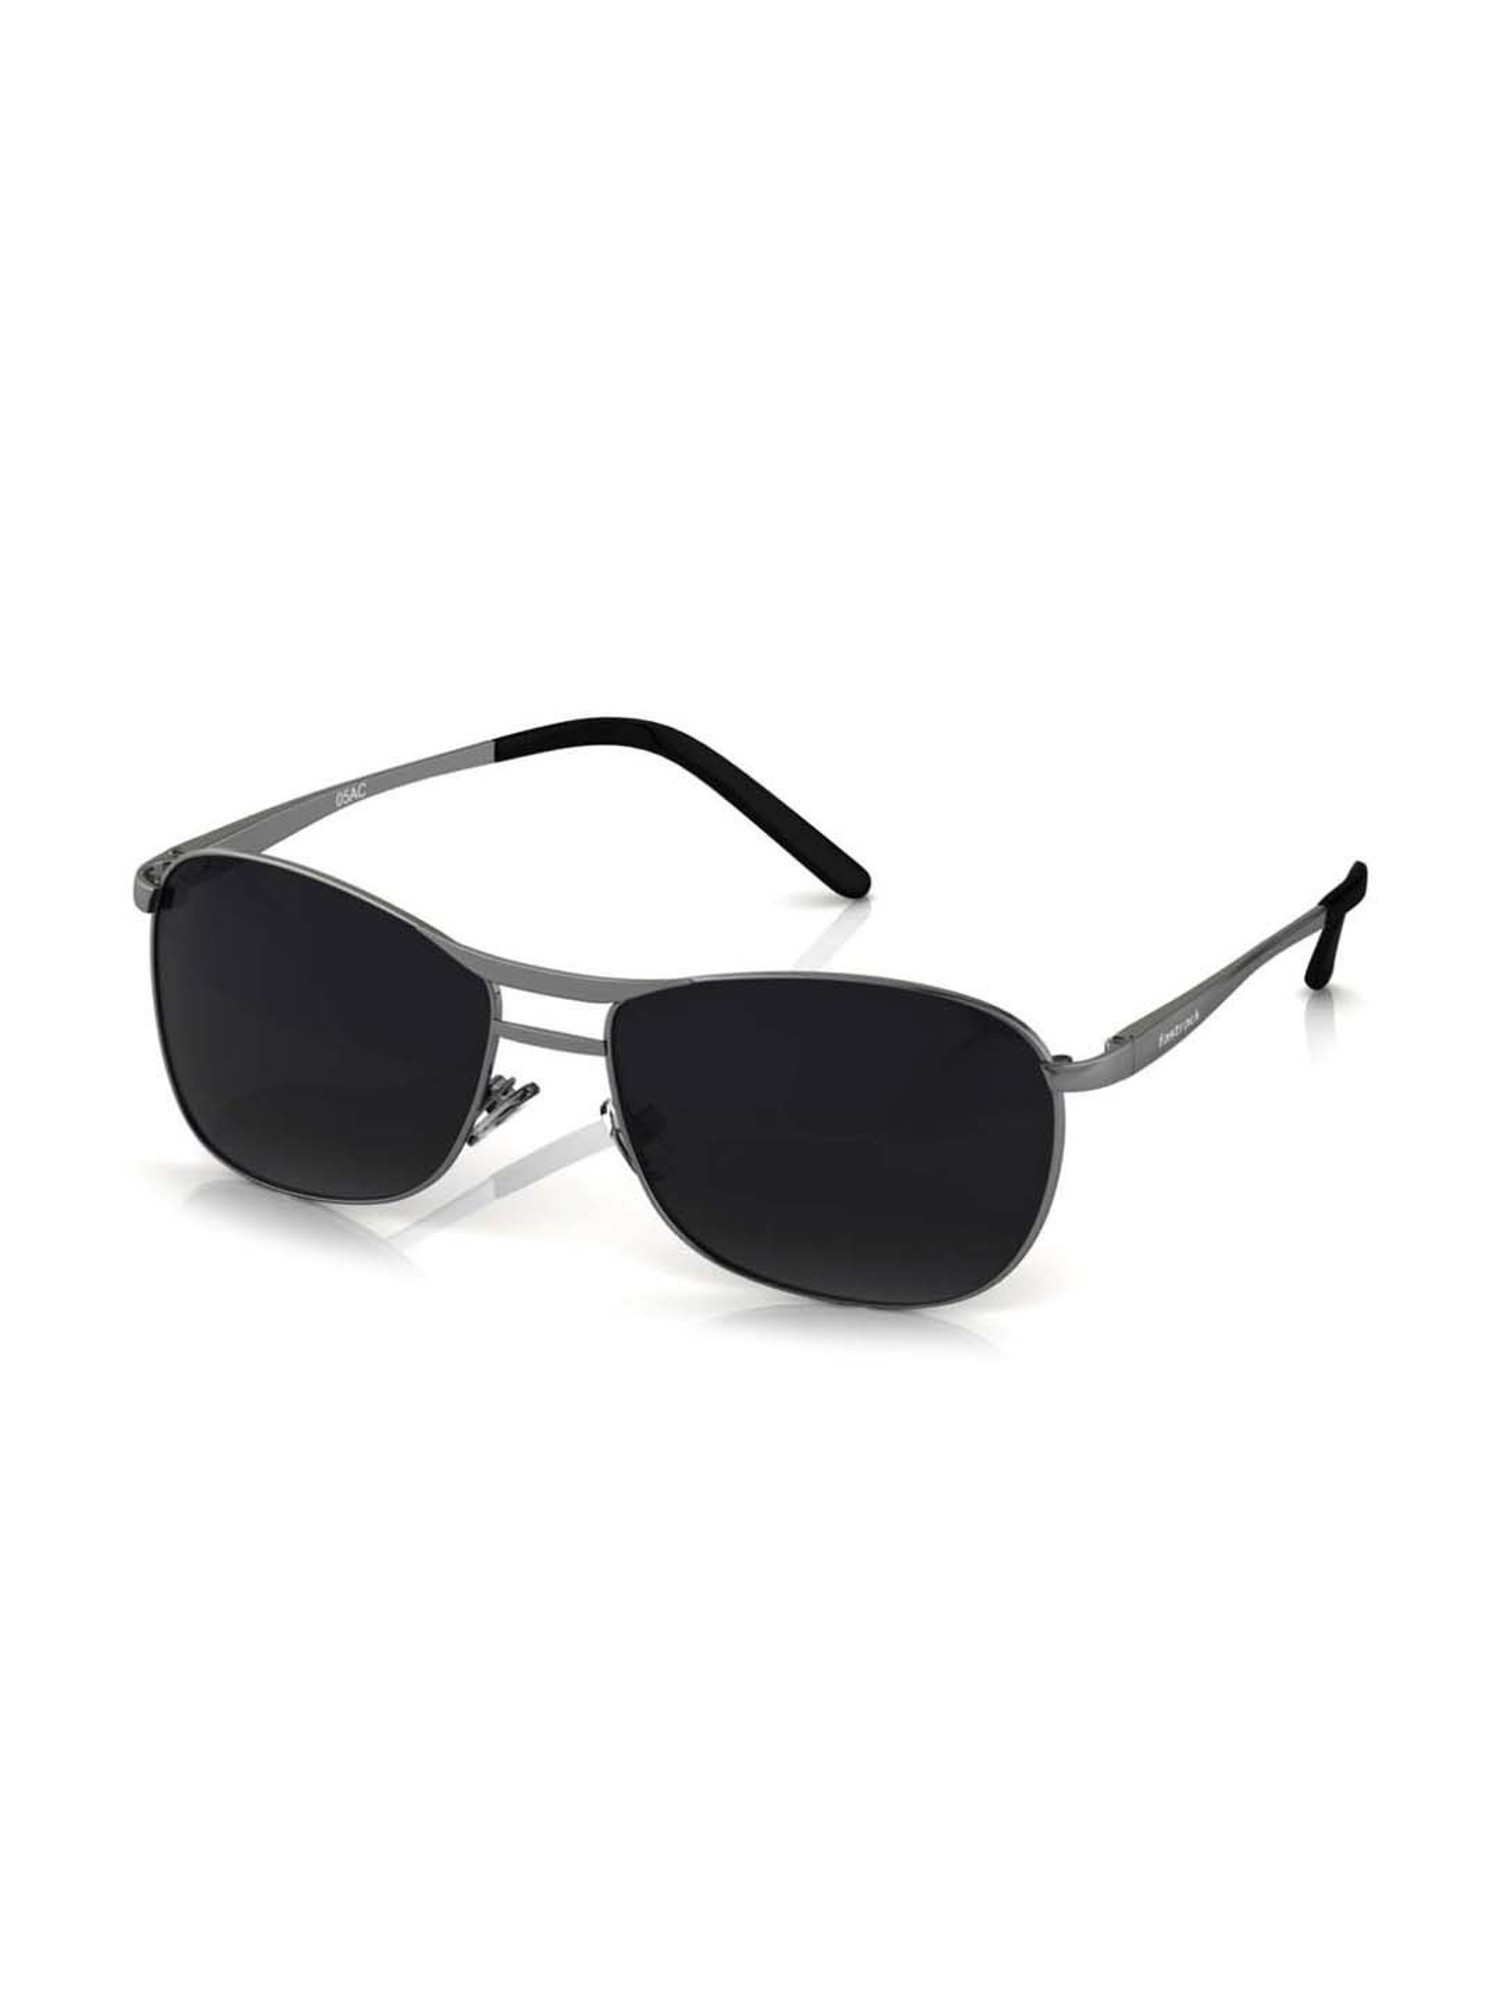 Fastrack Navigator Sunglasses For Men M080GR2 | Gifts to Nepal | Giftmandu